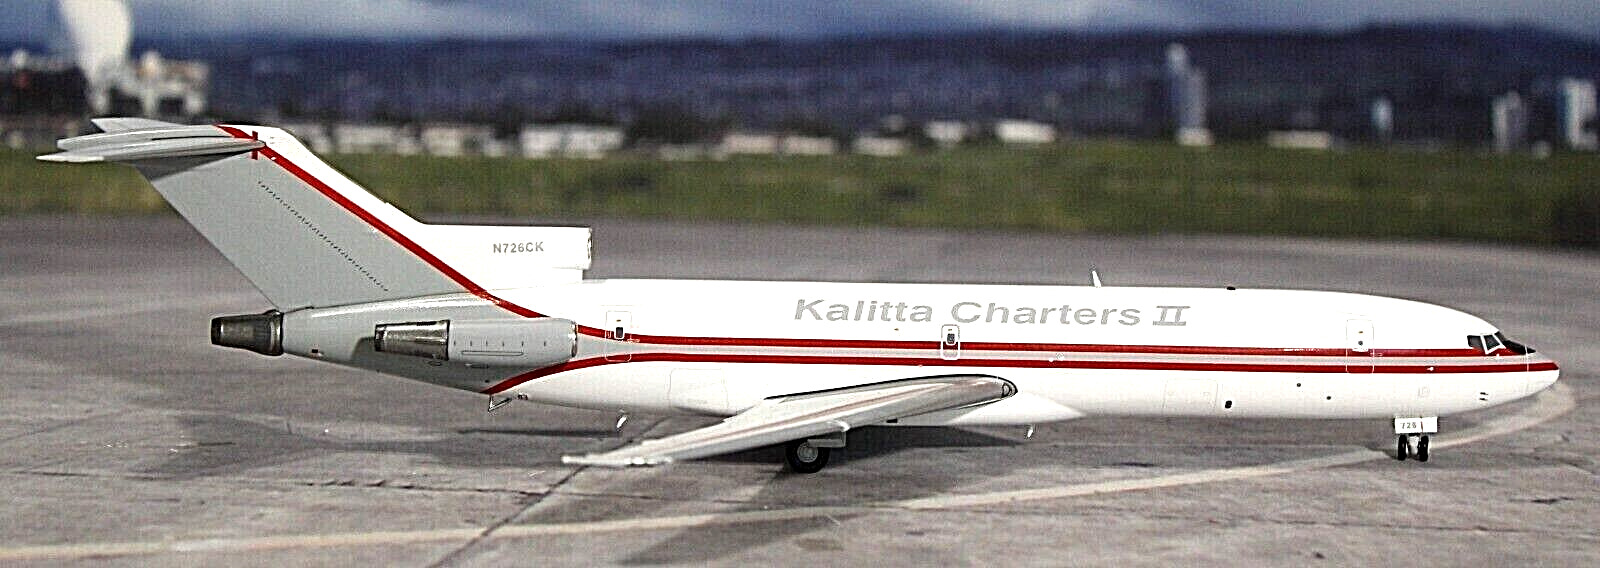 Gemini Boeing 727 200F Kalitta Charters ll  1:200 Scale BEAUTIFUL MODEL